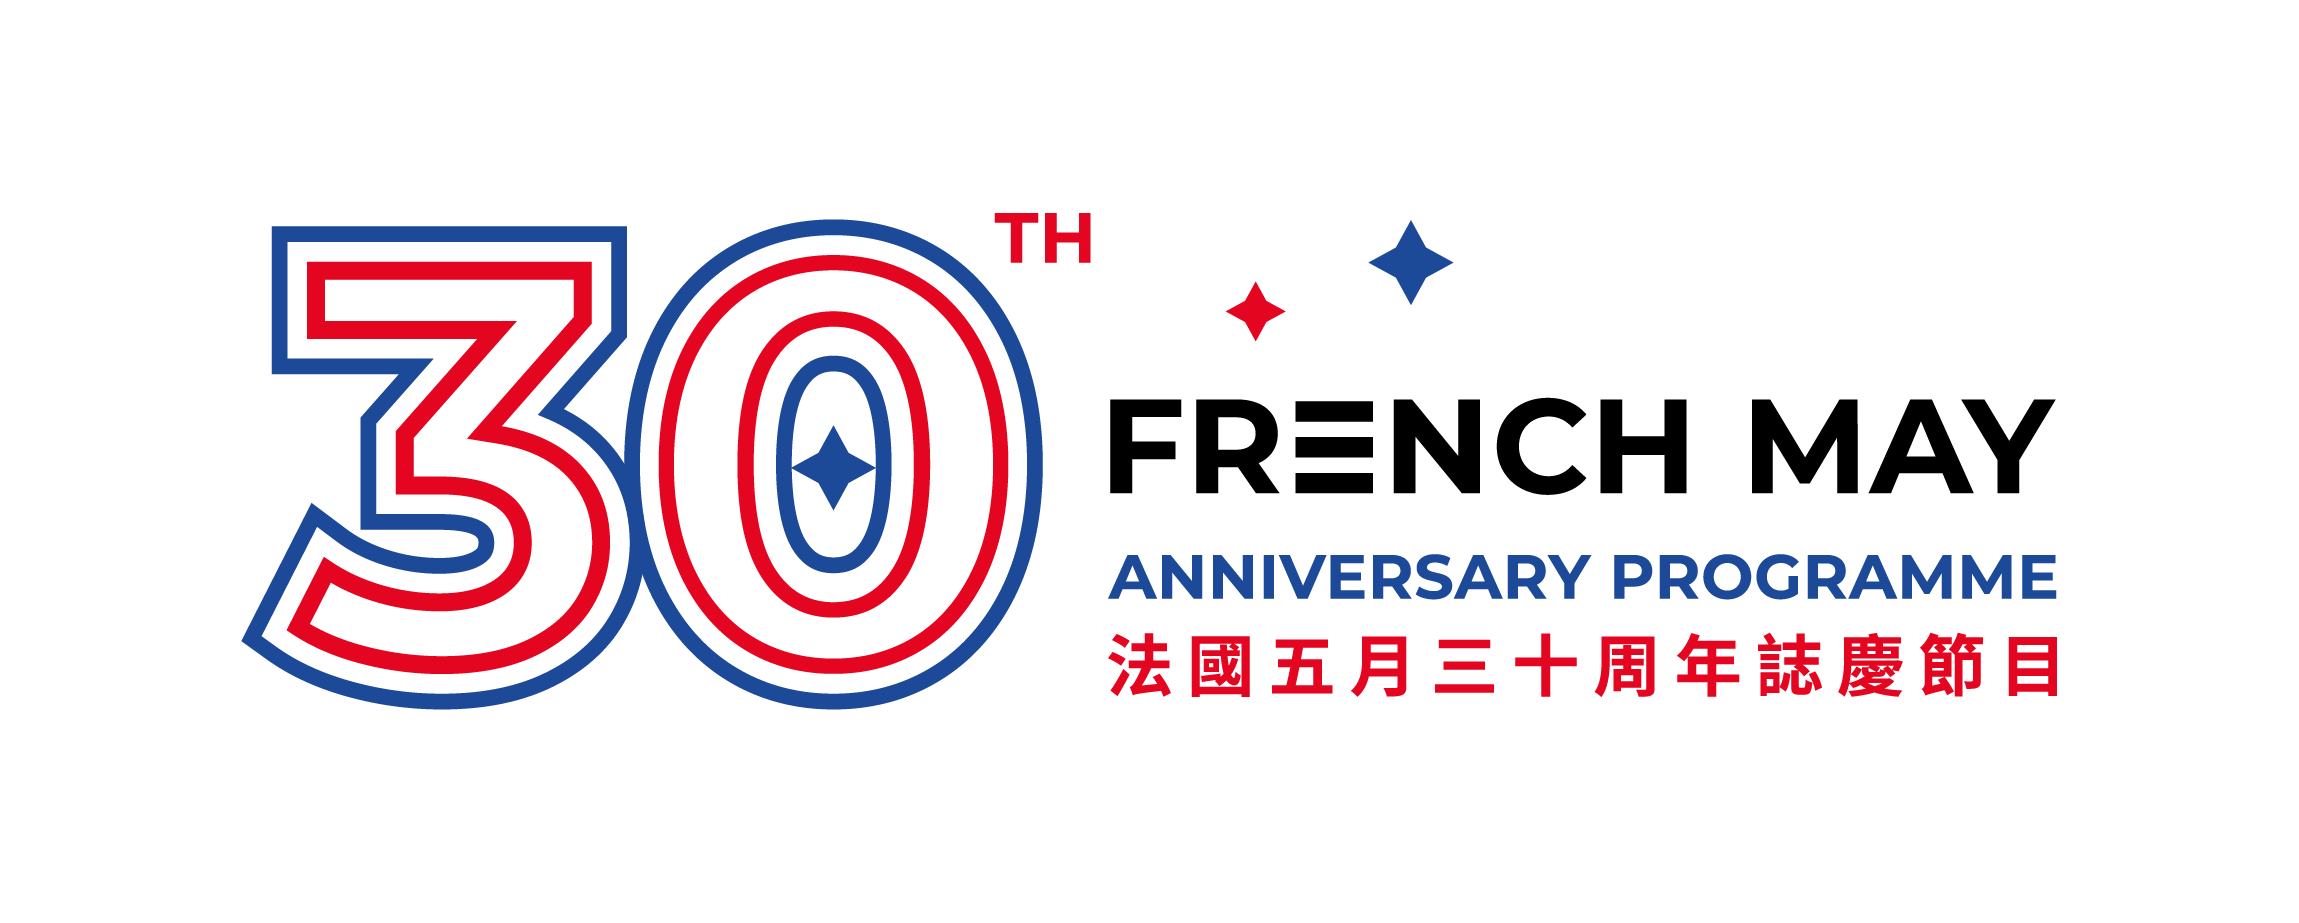 Logo 30 ans French May